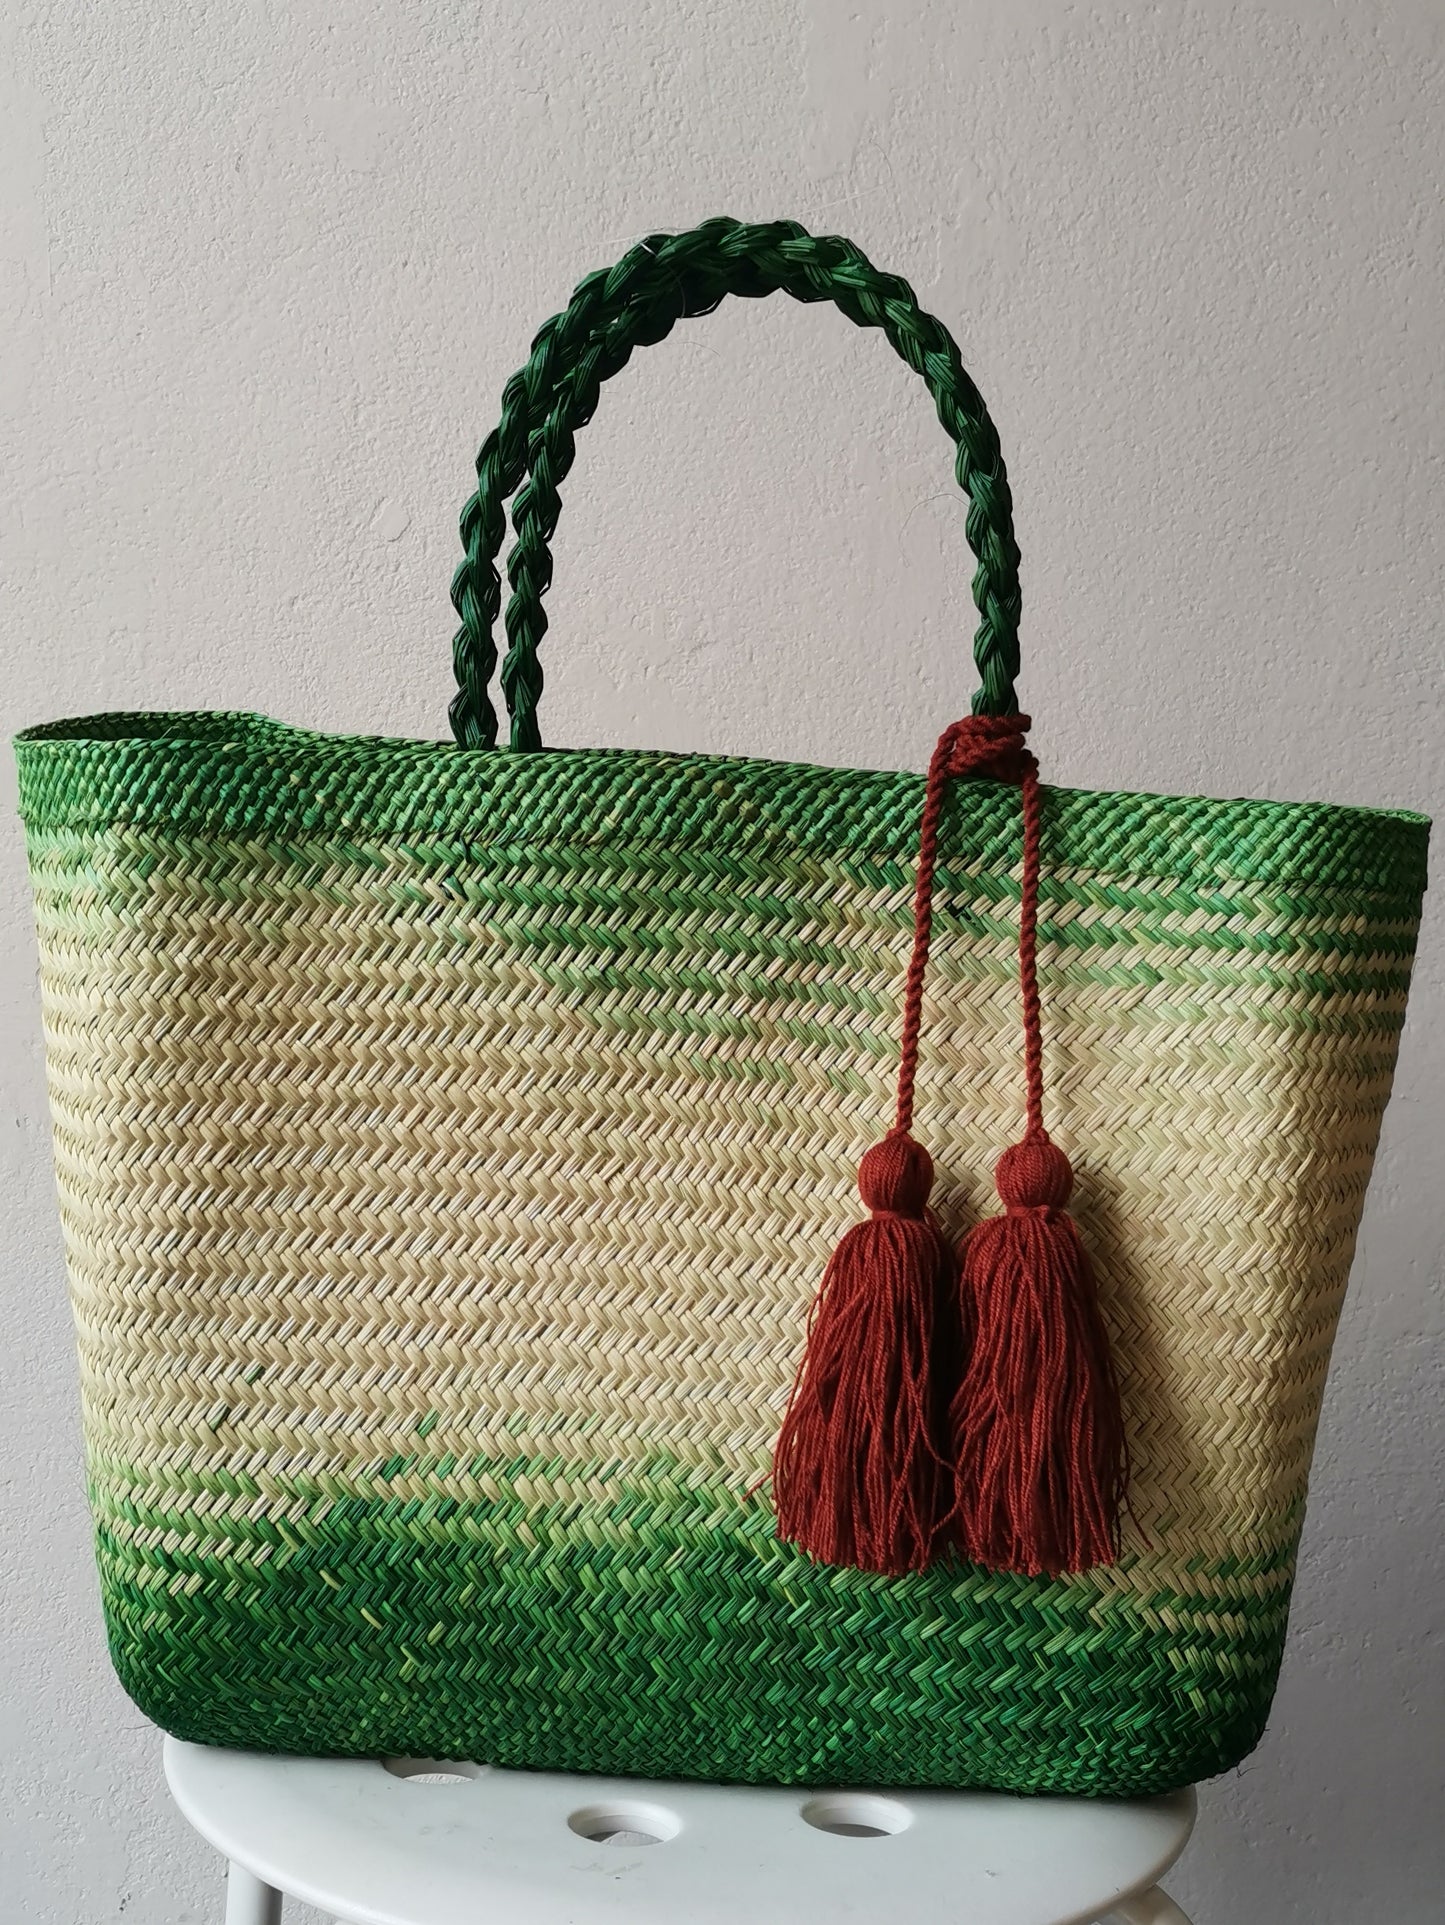 Cali L basket bag natural and green color